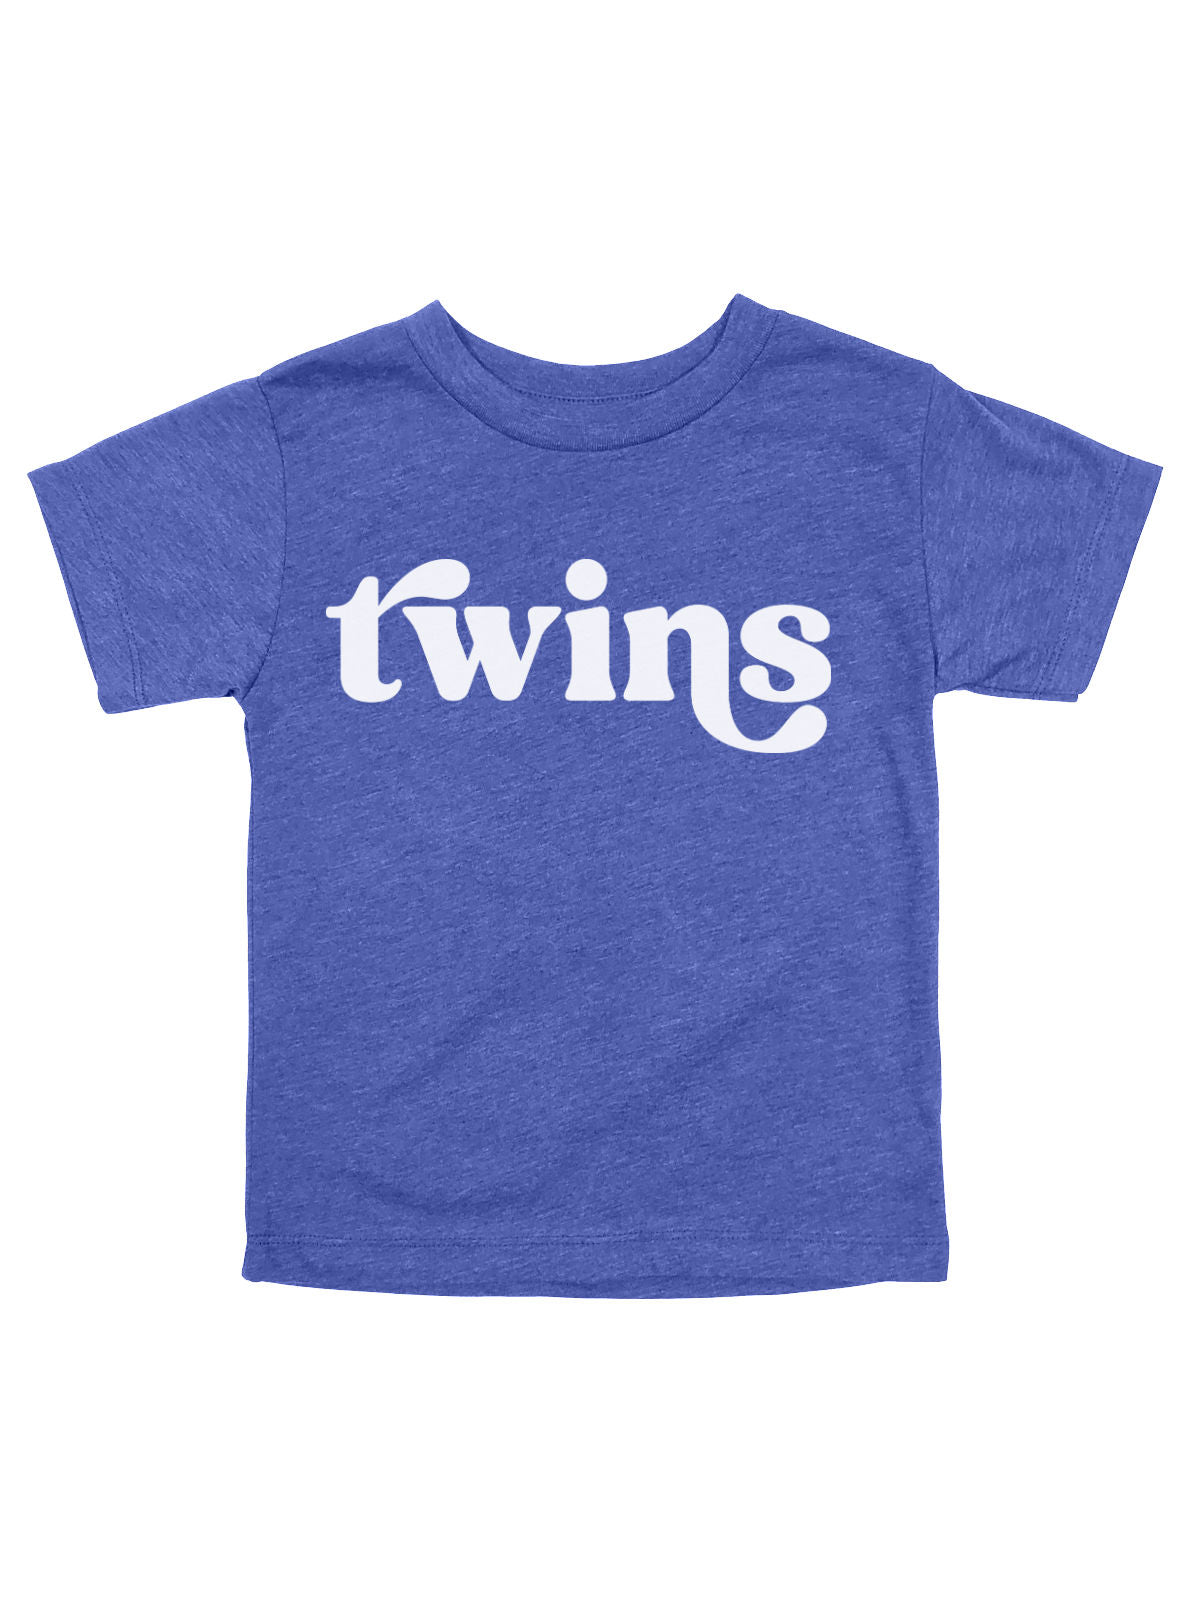 Twins Matching Shirt in Blue